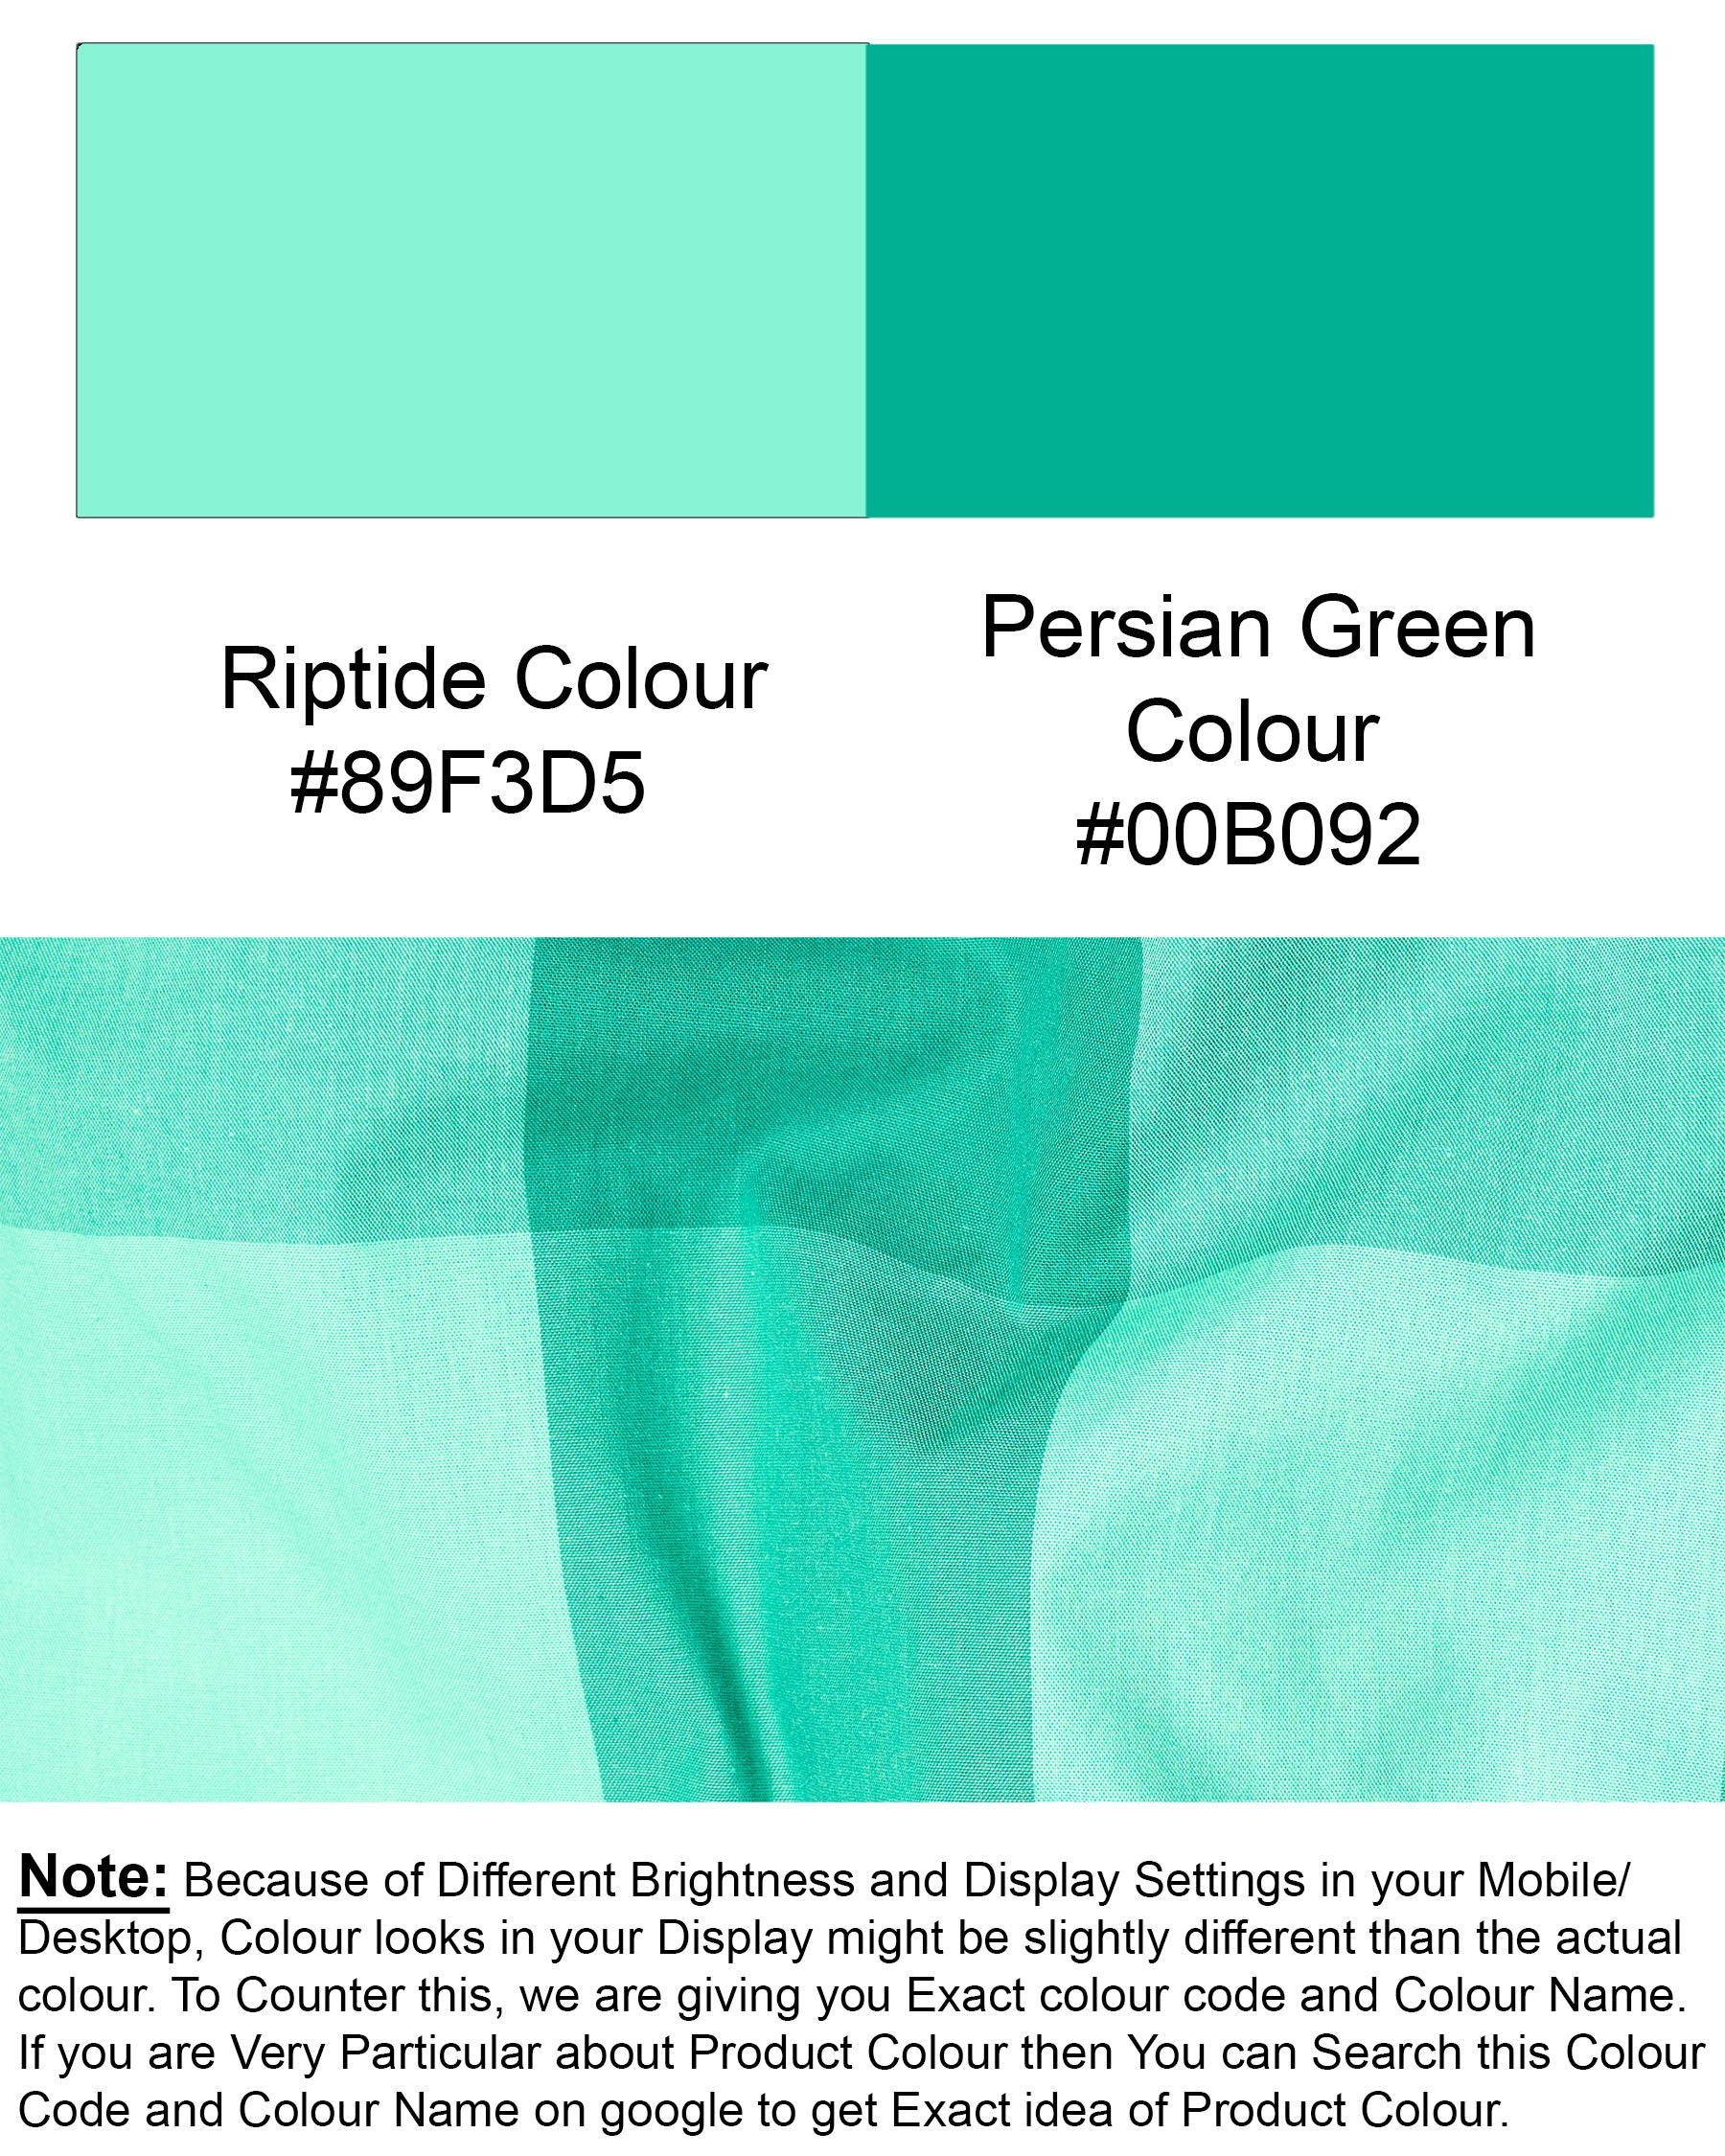 Riptide and Persian Green Premium Cotton Shirt 6902-38,6902-38,6902-39,6902-39,6902-40,6902-40,6902-42,6902-42,6902-44,6902-44,6902-46,6902-46,6902-48,6902-48,6902-50,6902-50,6902-52,6902-52